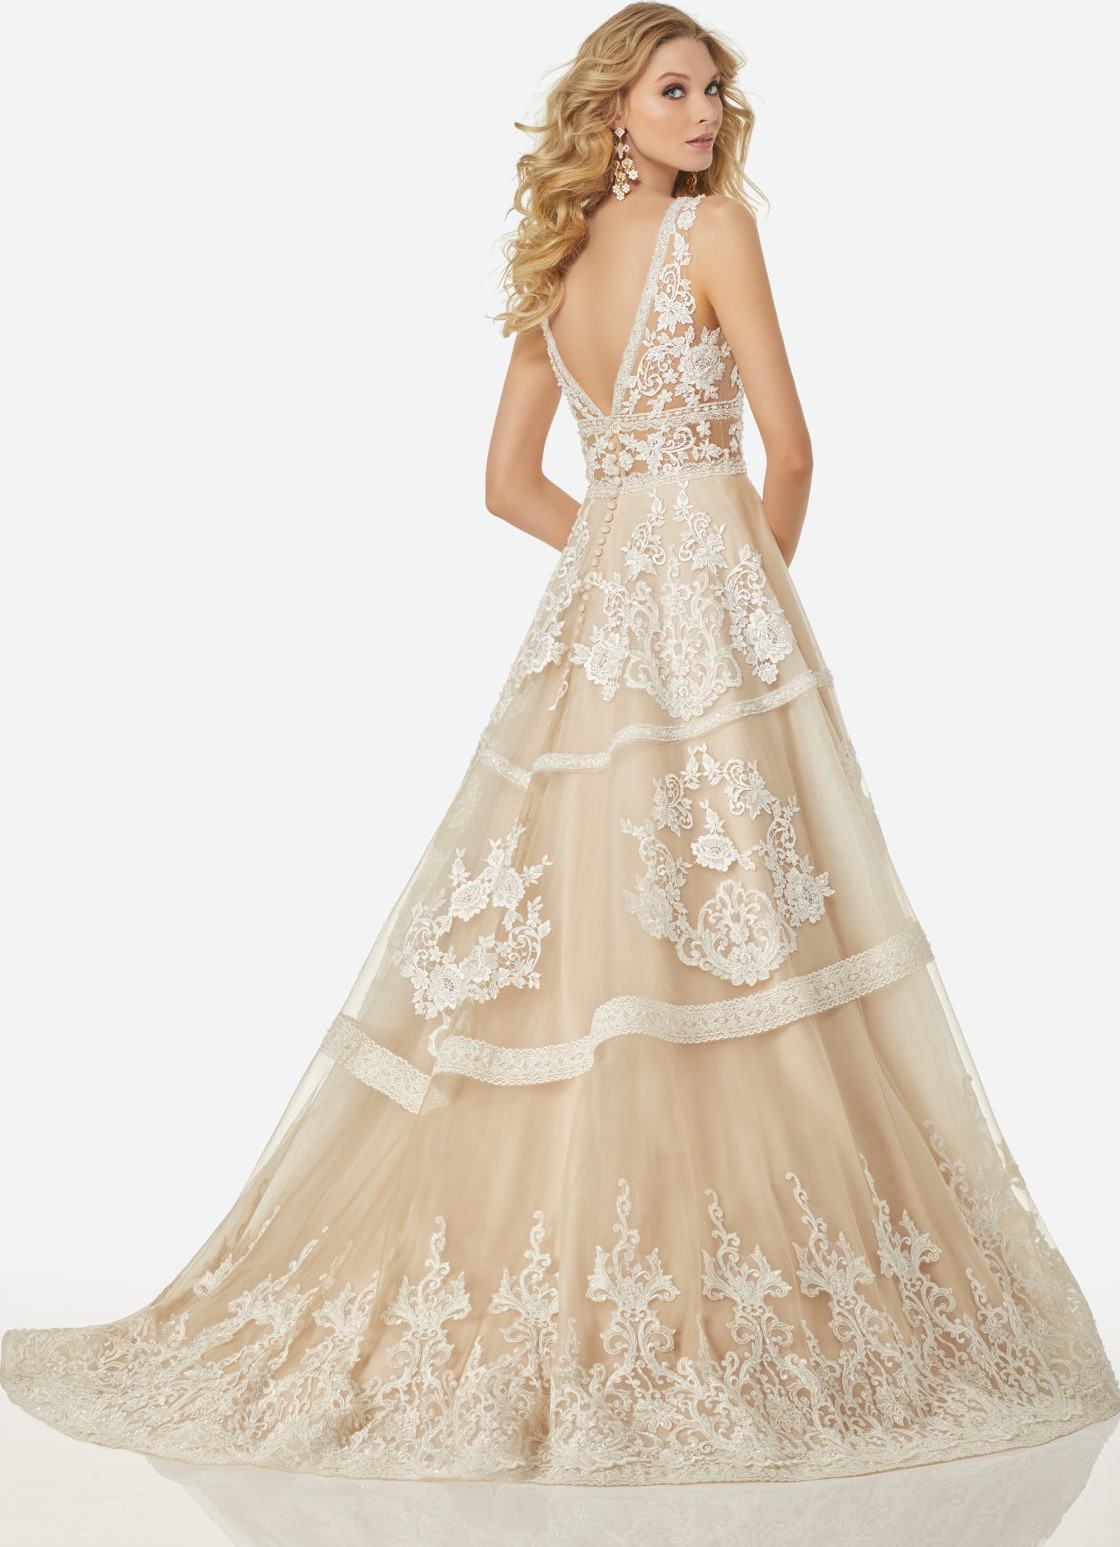 Randy Fenoli Michelle Preloved Wedding Dress on Sale 74% ...